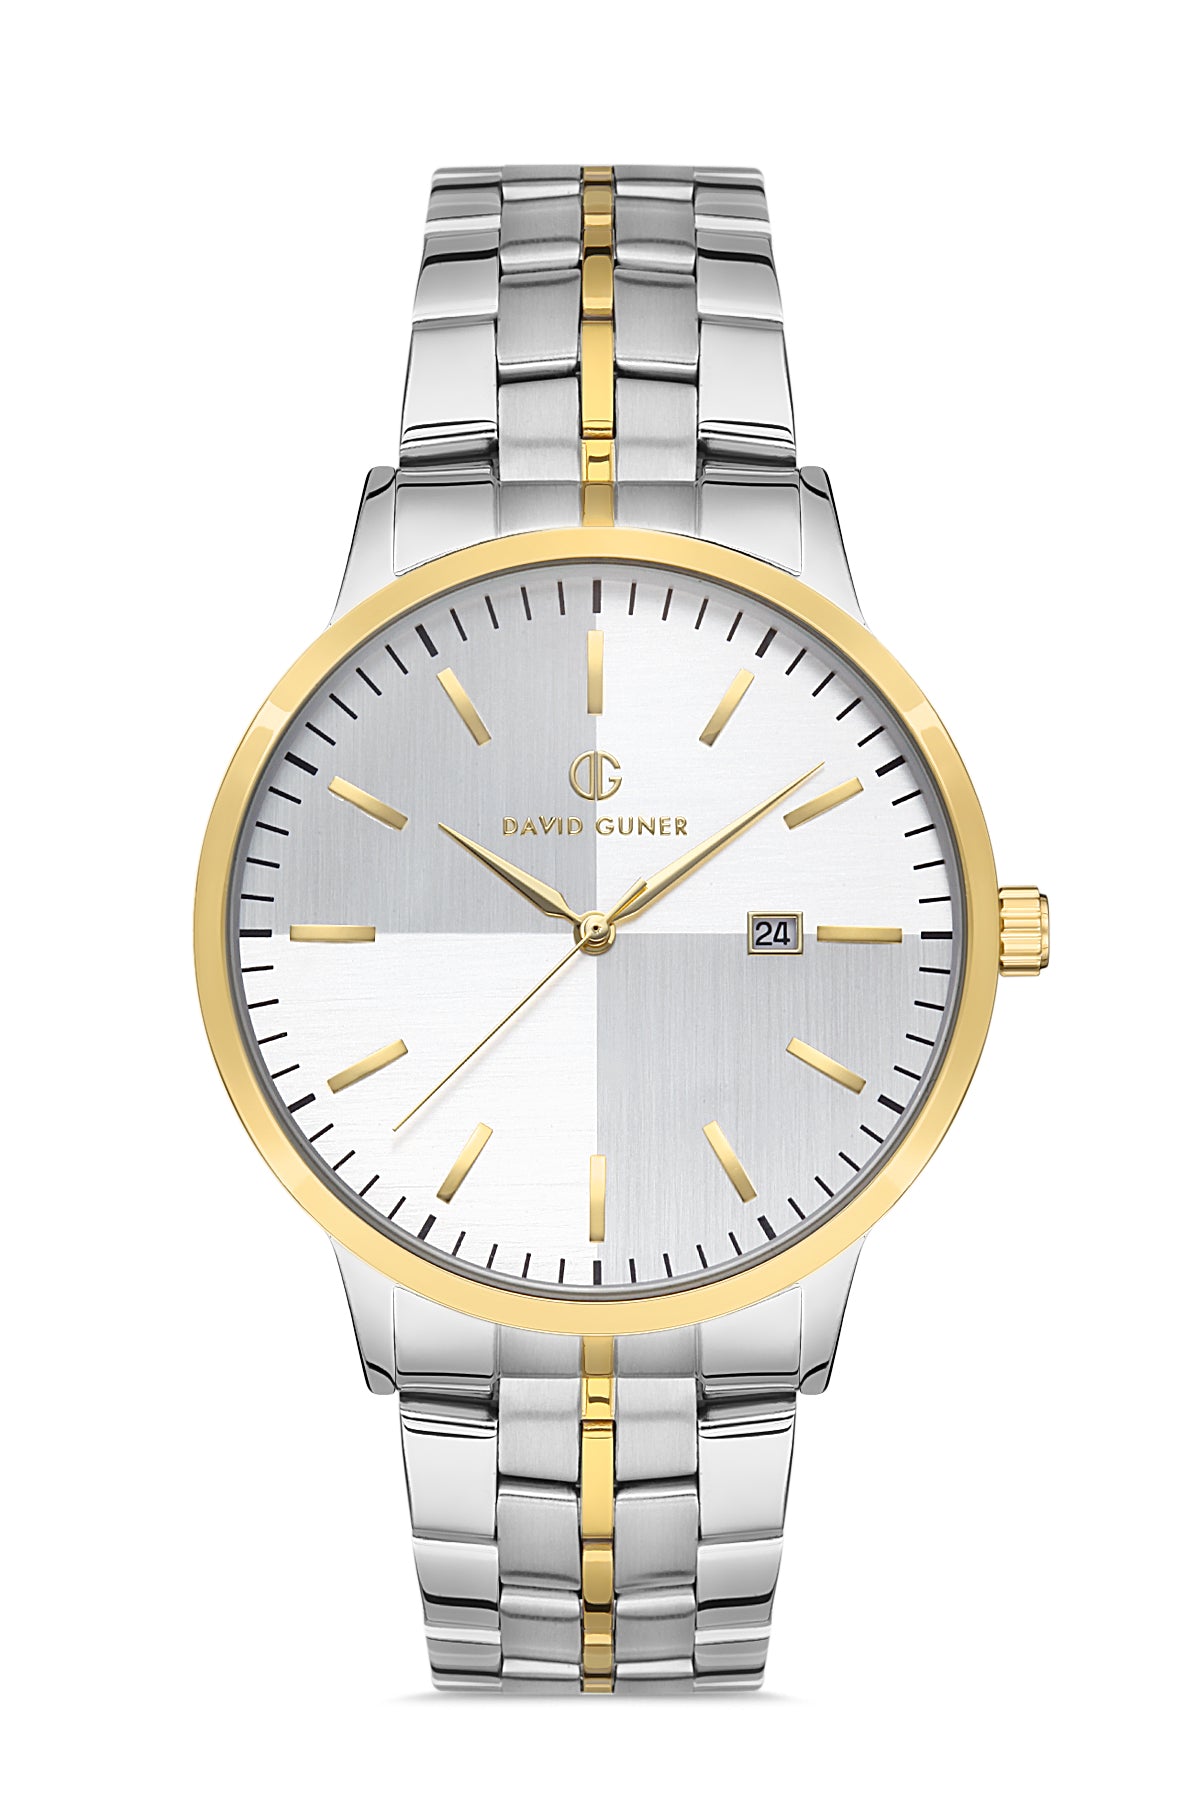 DAVID GUNER Yellow and White Coated Calendar Men's Wristwatch